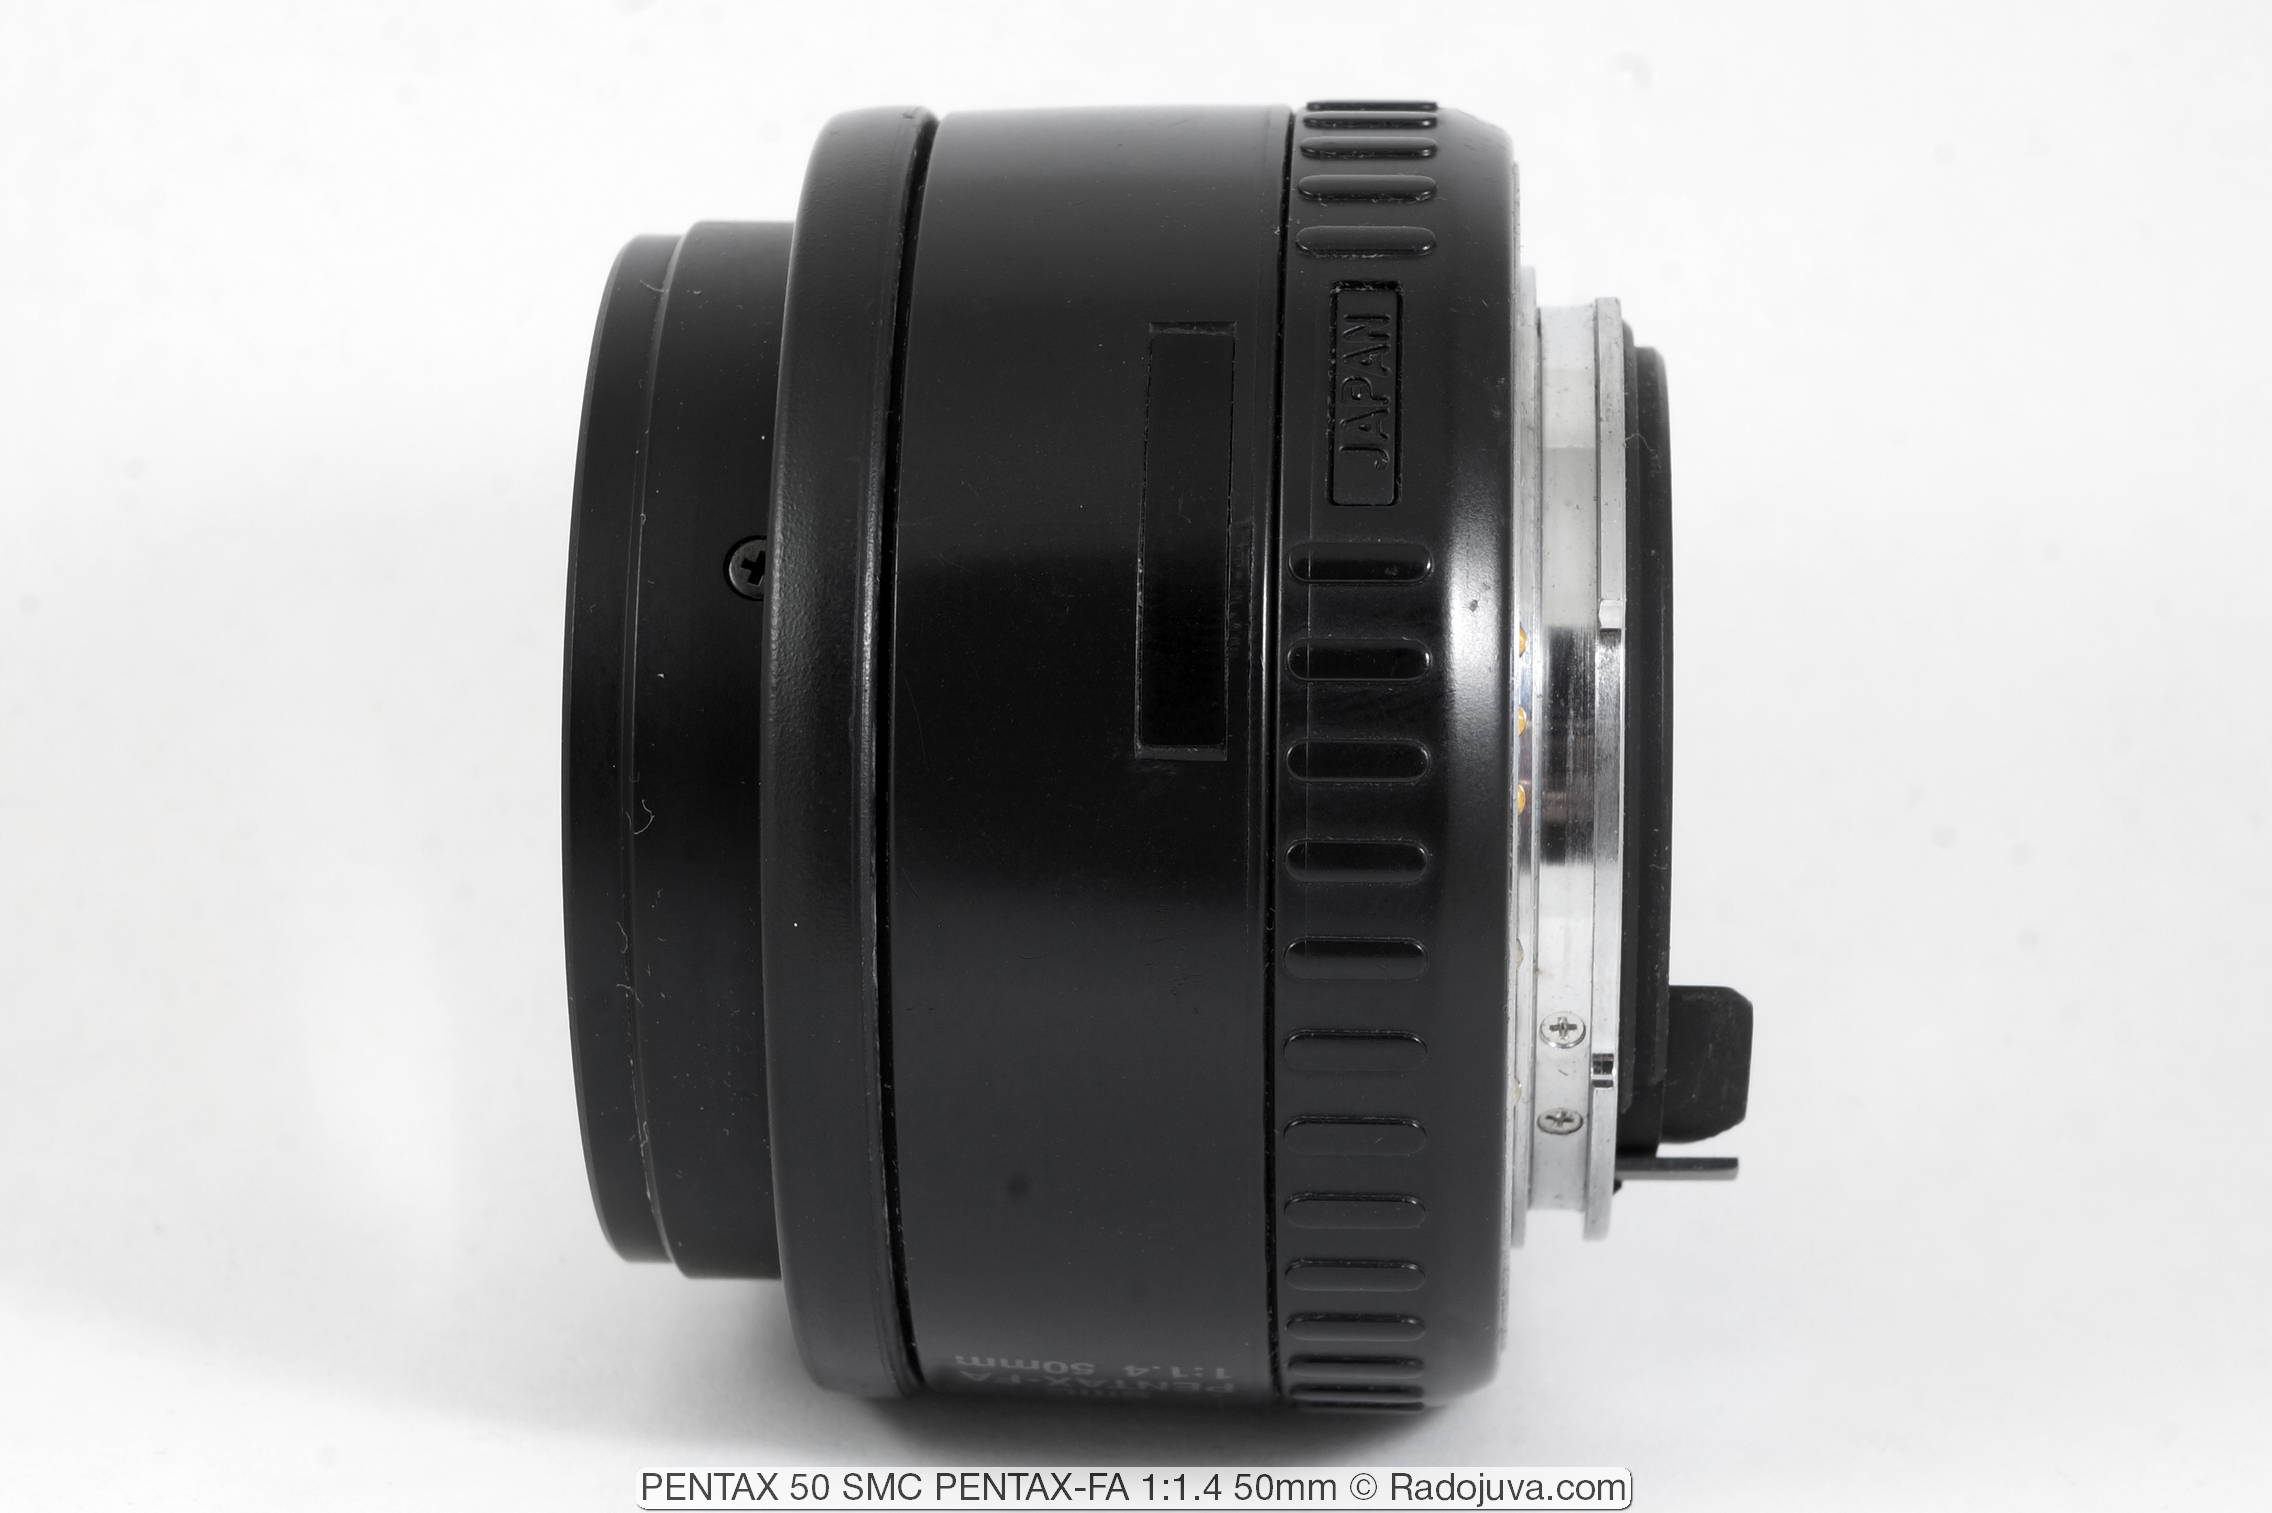 PENTAX 50 SMC PENTAX-FA 1: 1.4 50mm